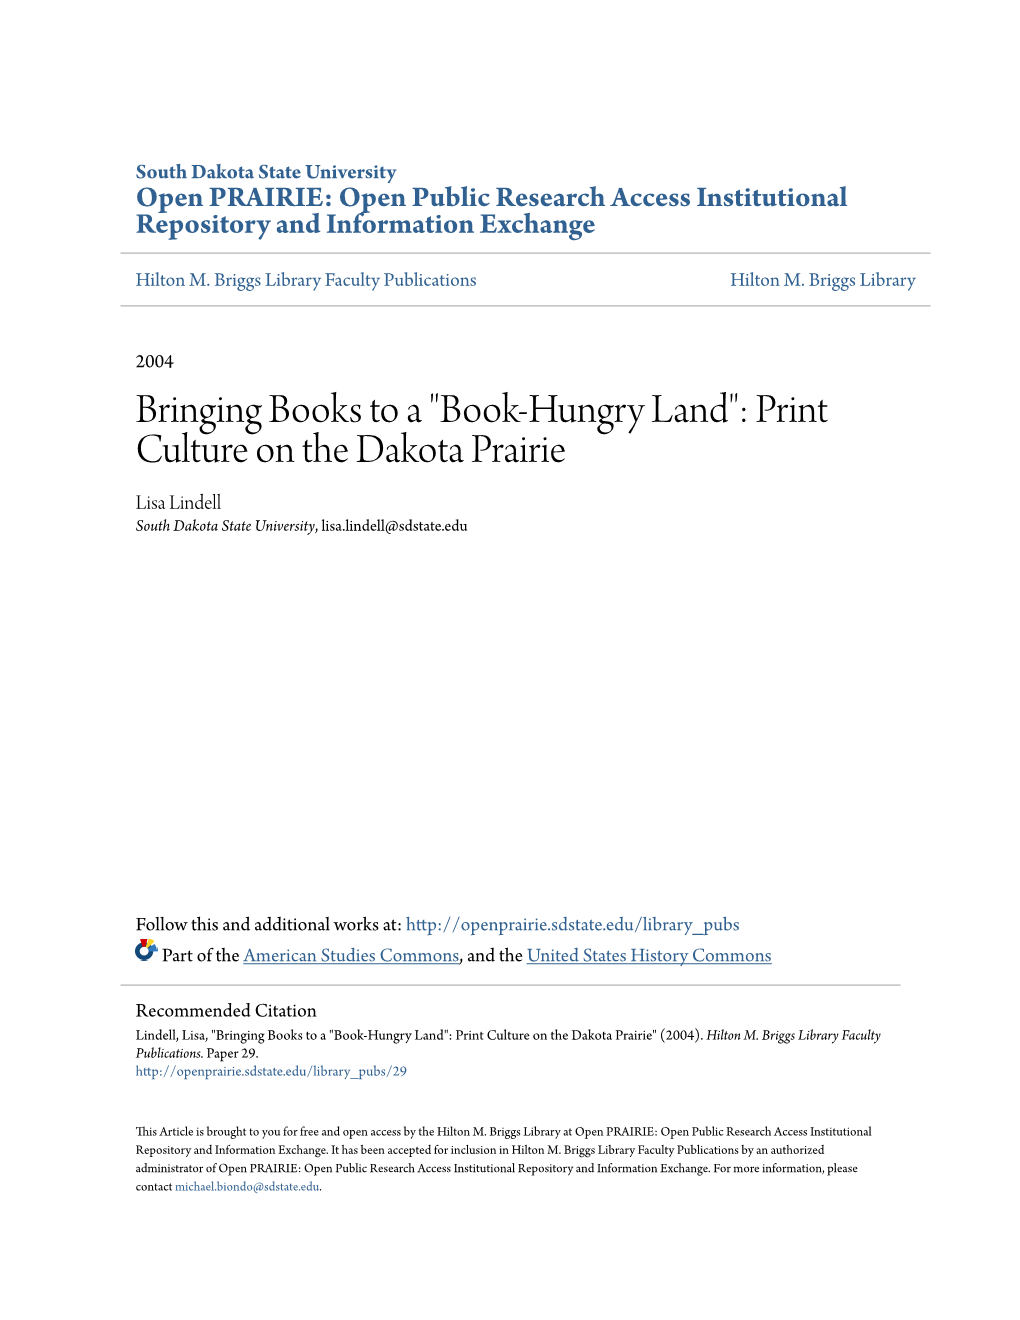 Bringing Books to a "Book-Hungry Land": Print Culture on the Dakota Prairie Lisa Lindell South Dakota State University, Lisa.Lindell@Sdstate.Edu